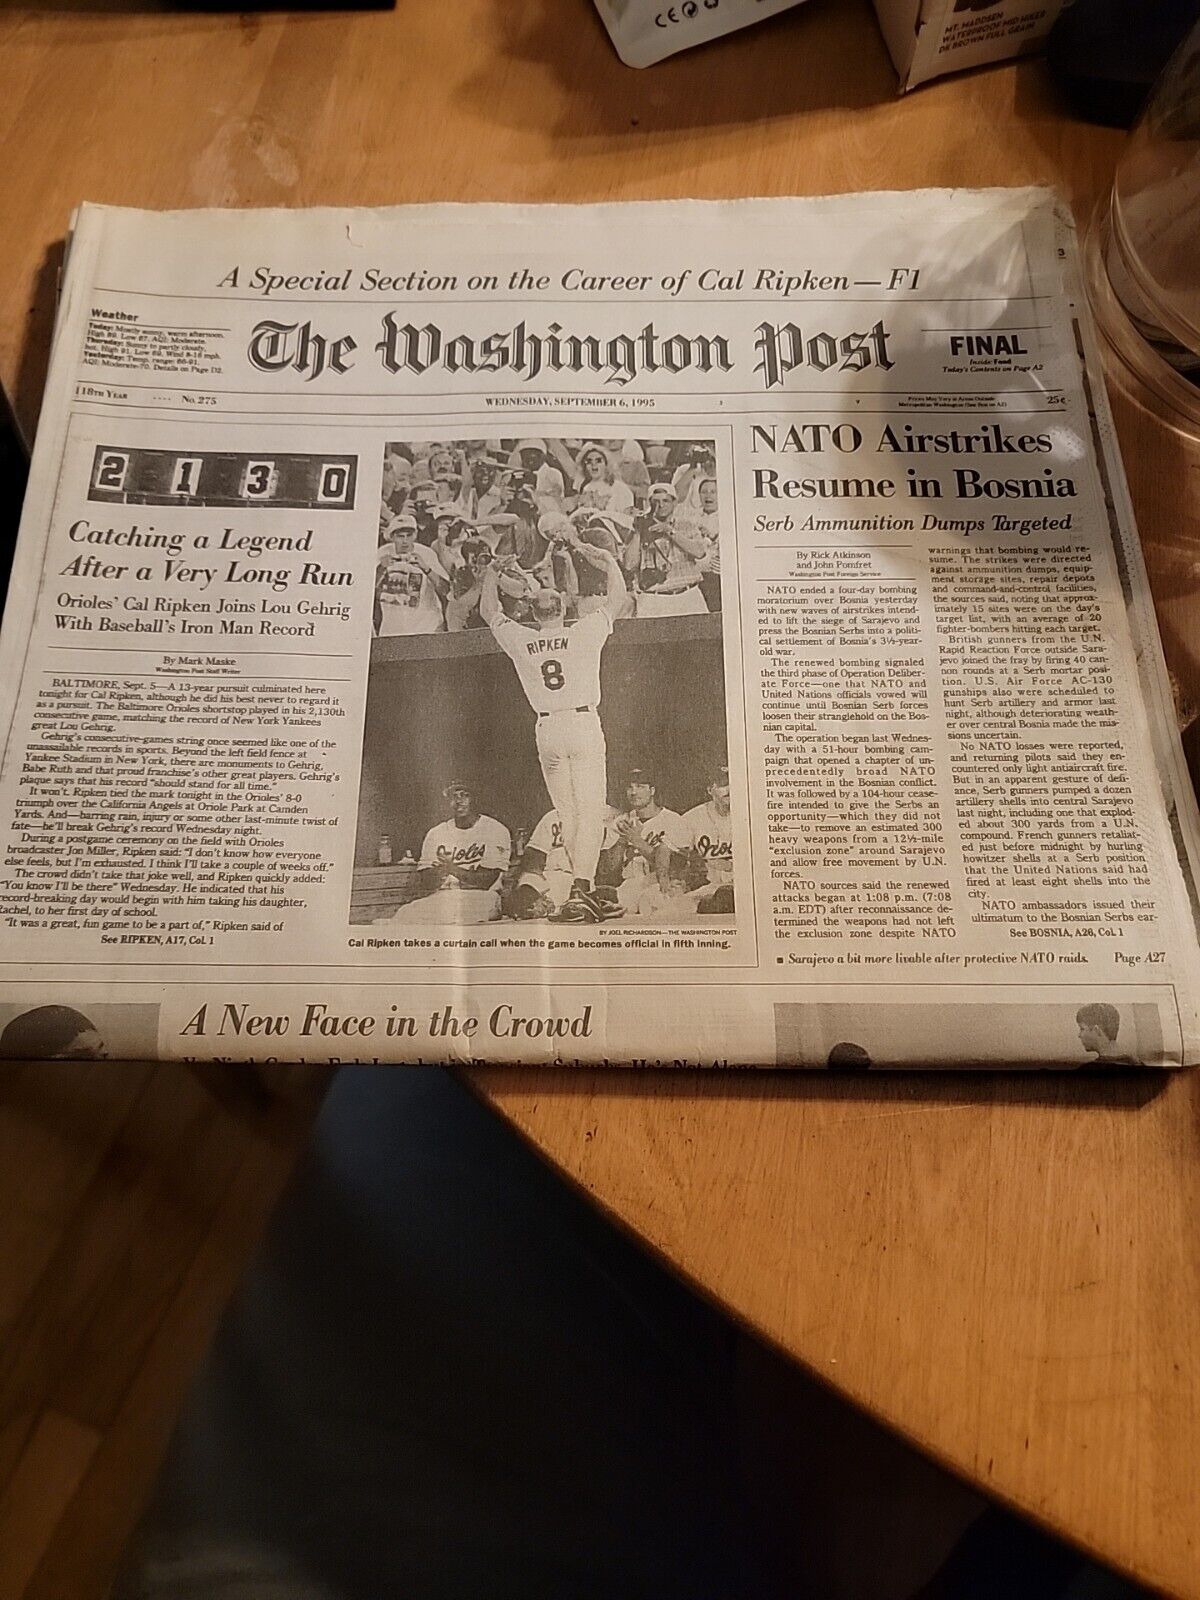 The Washington Post Wednesday sept  6, 1995 “cal ripken iron man record” 